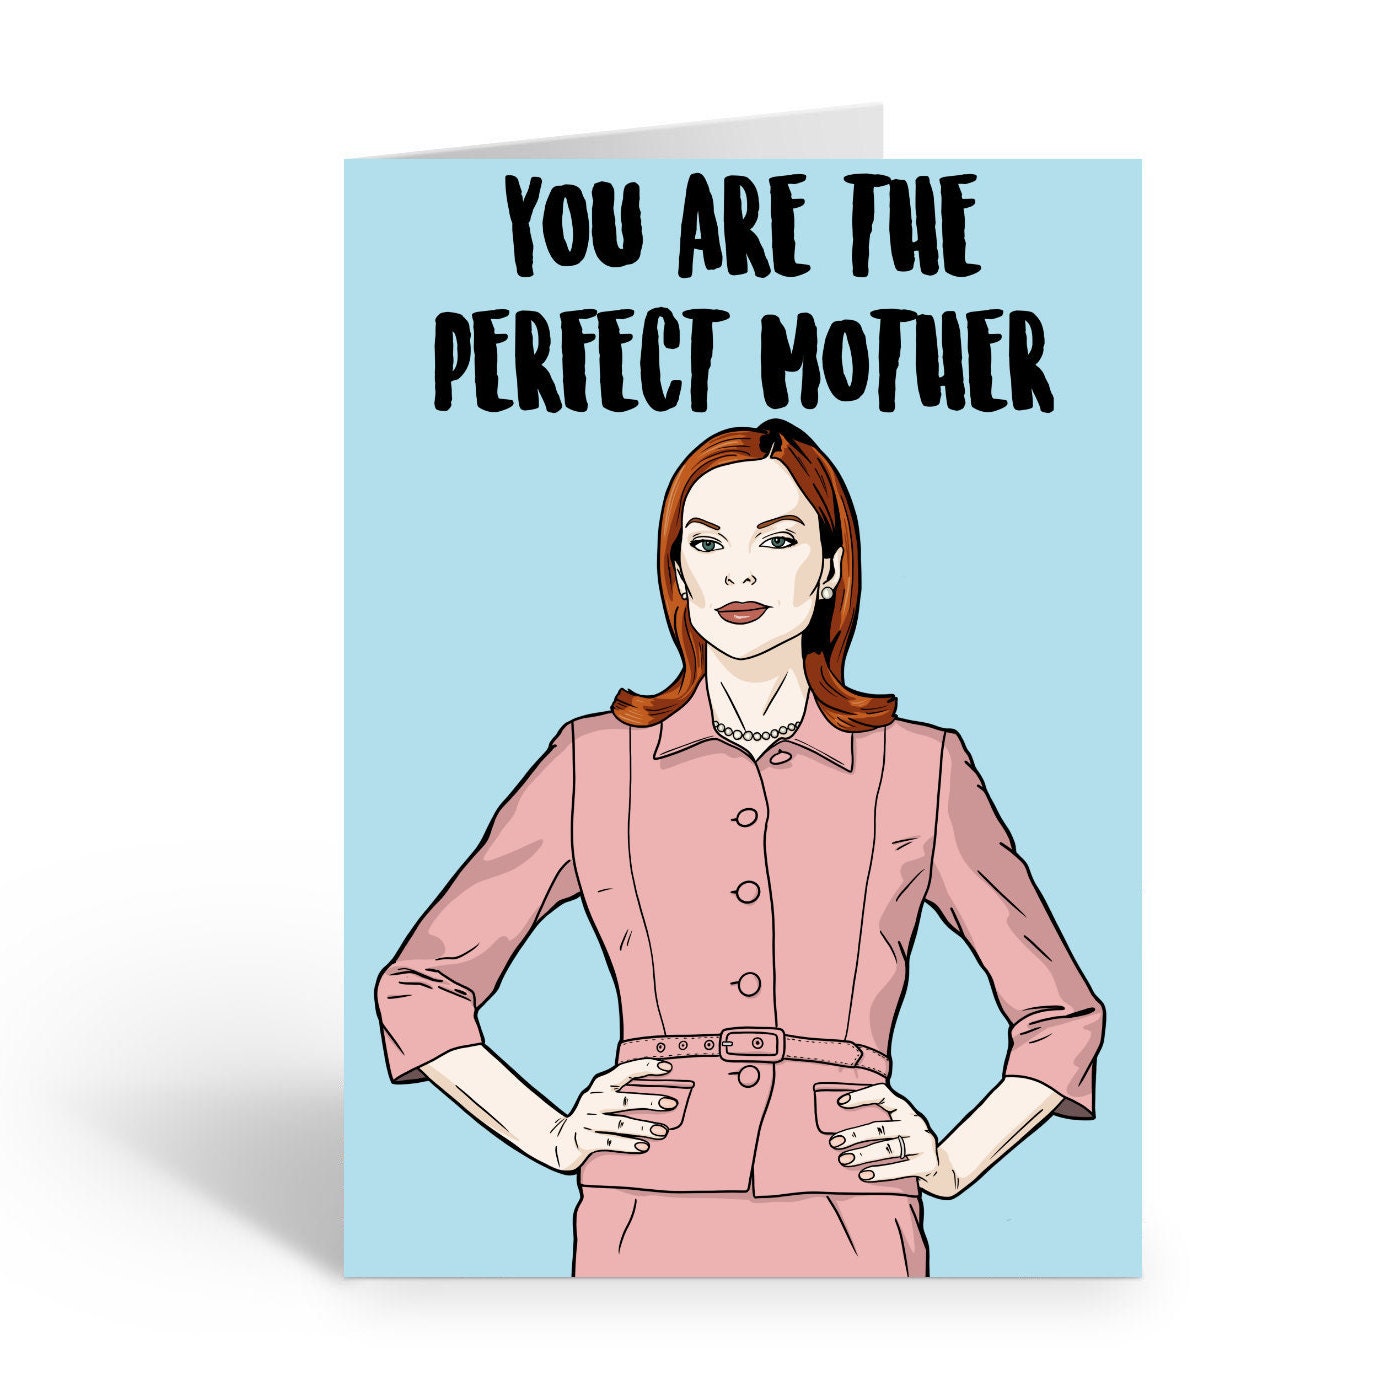 Bree Van De Kamp Mothers Day Card Desperate Housewives image